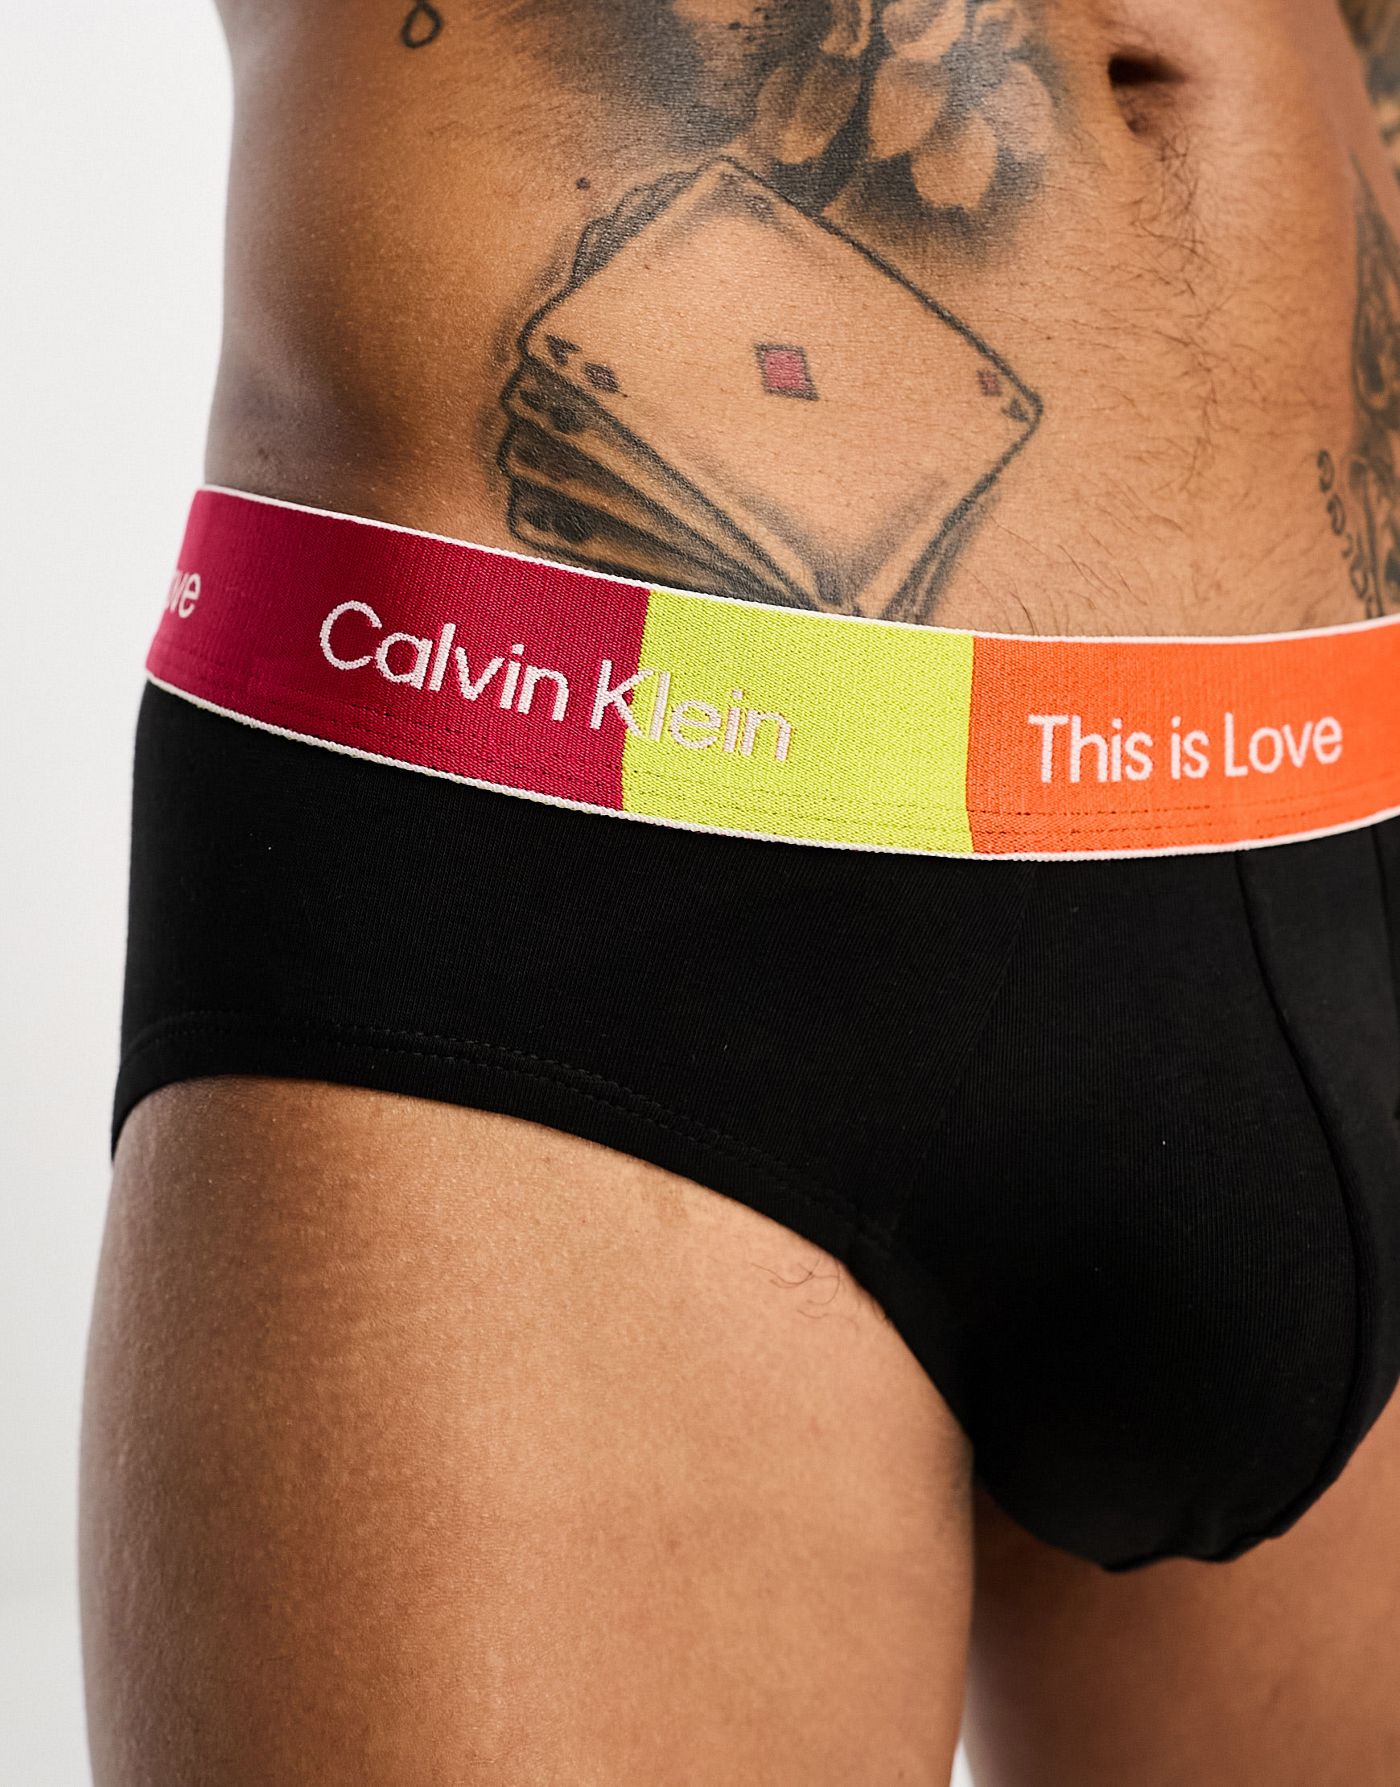 Calvin Klein Pride cotton brief in black